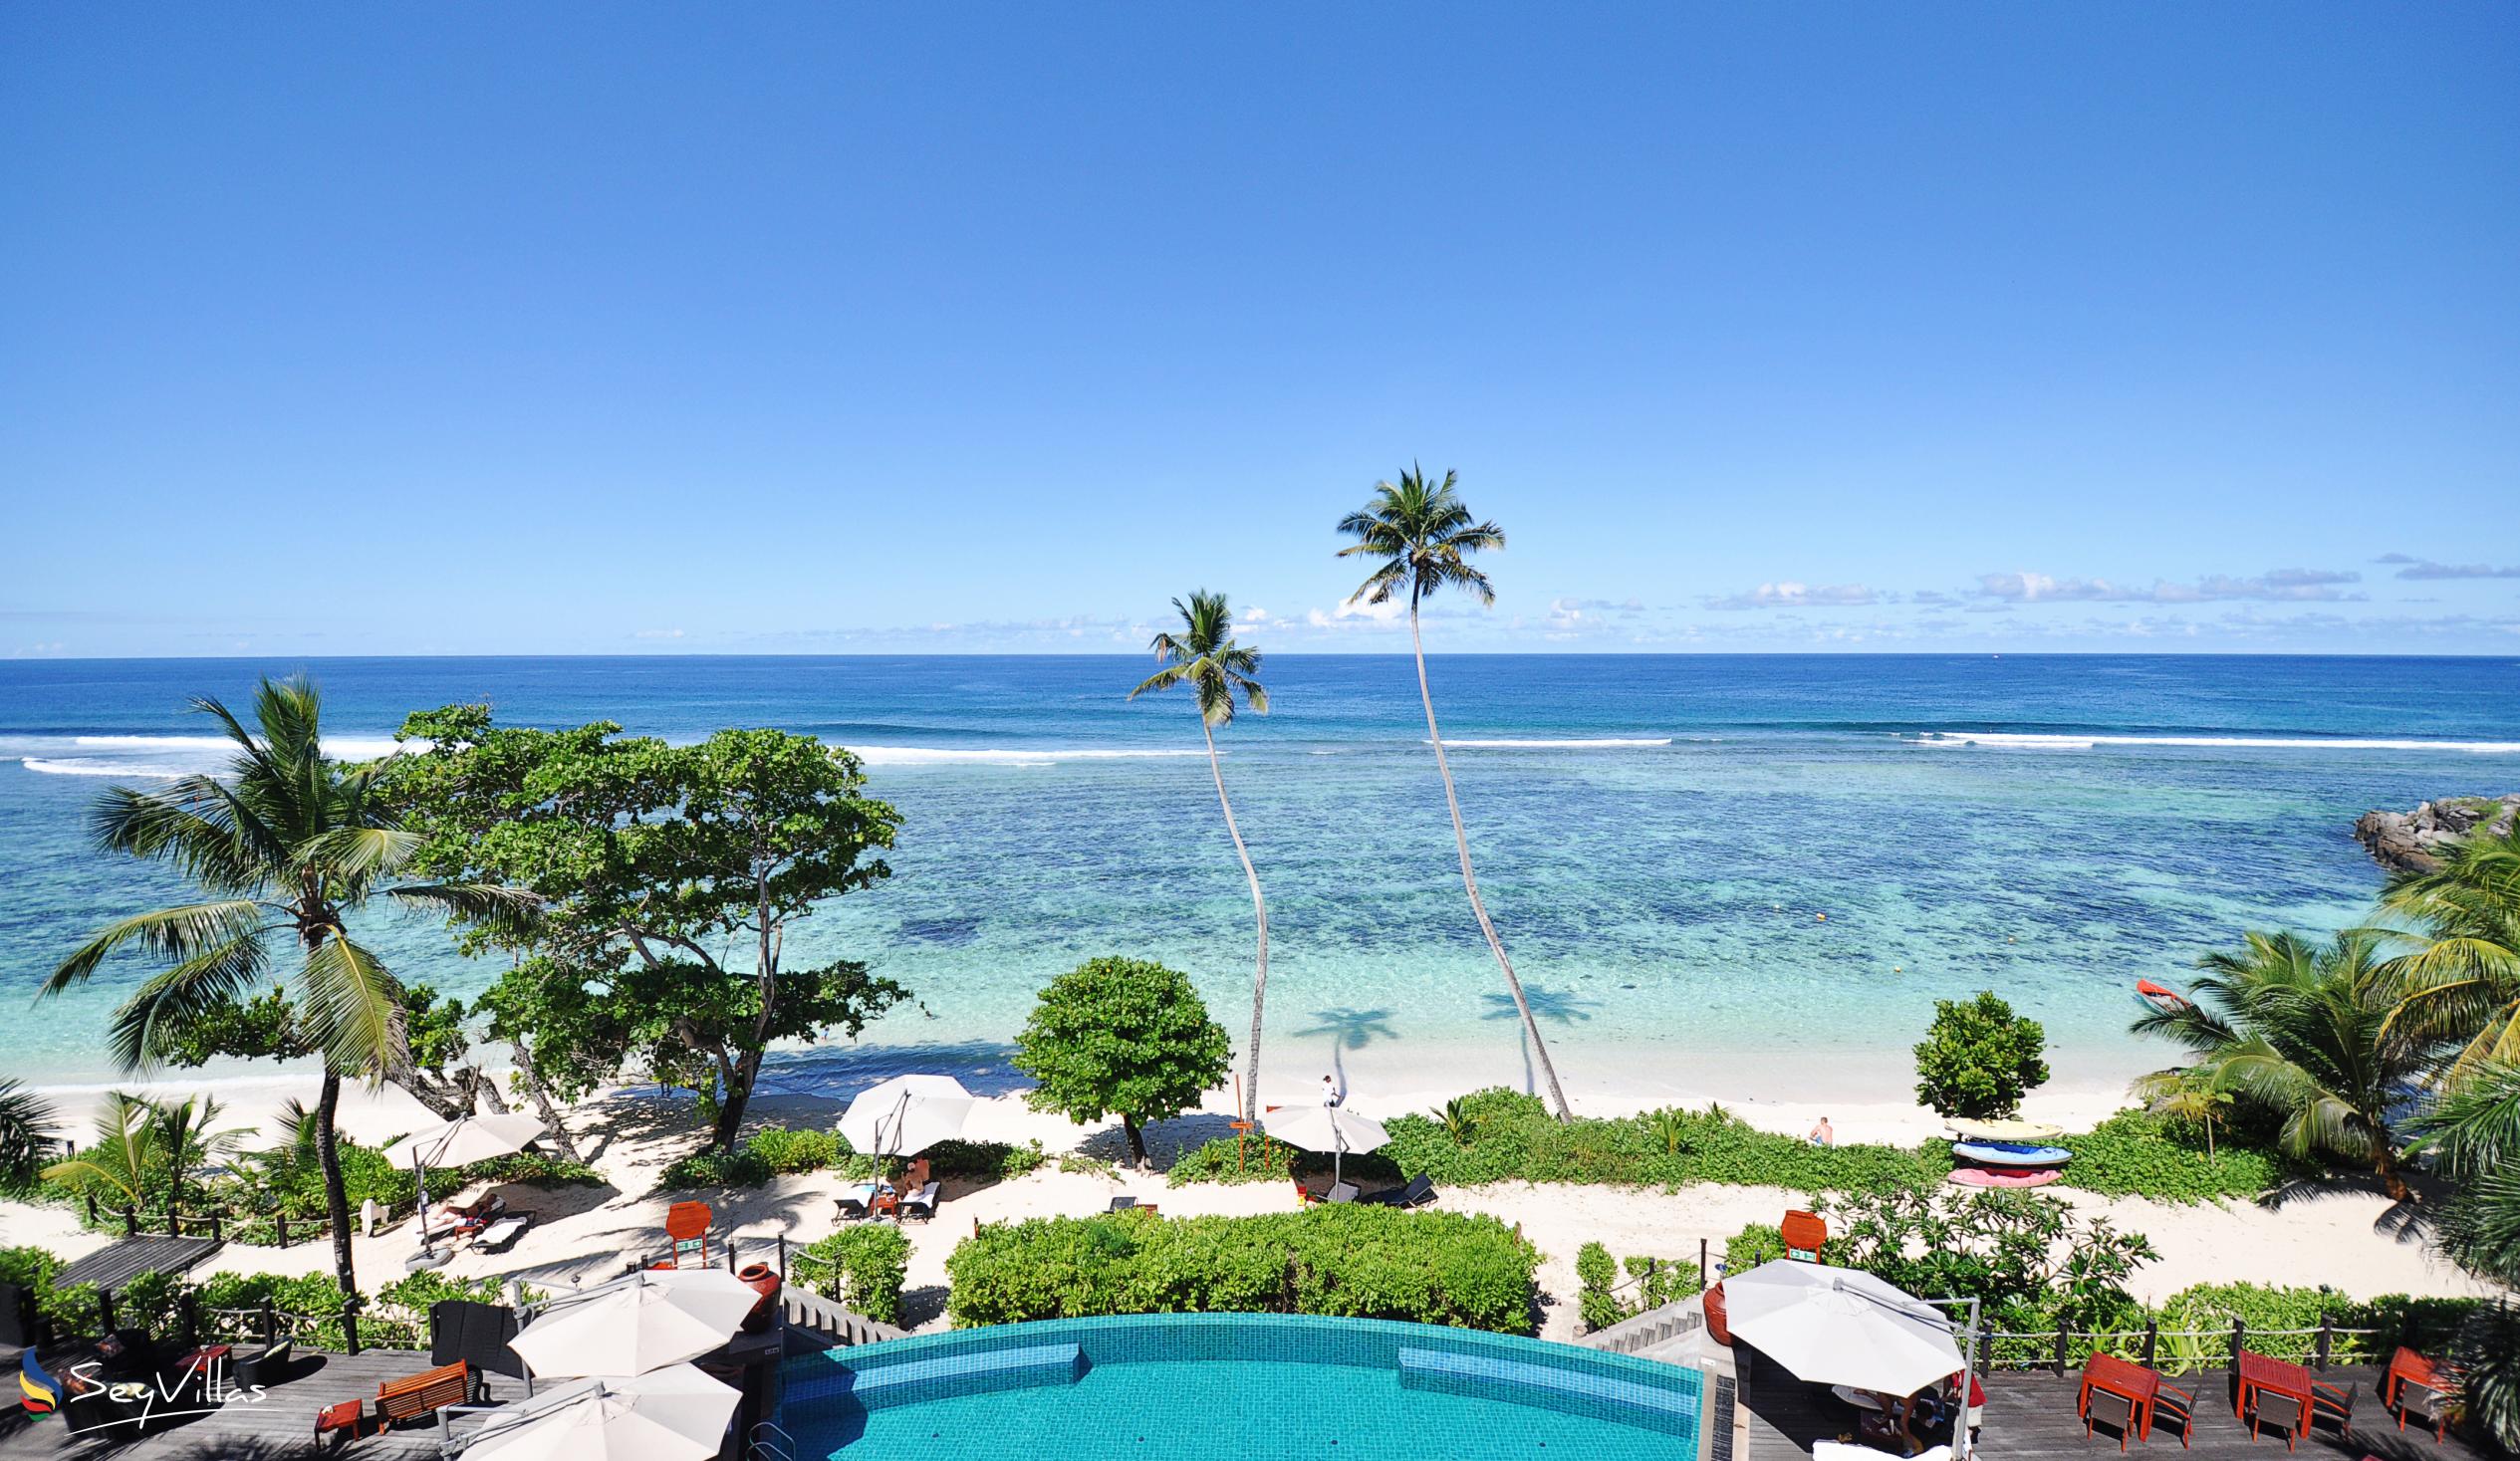 Foto 13: Double Tree by Hilton - Allamanda Resort & Spa - Aussenbereich - Mahé (Seychellen)